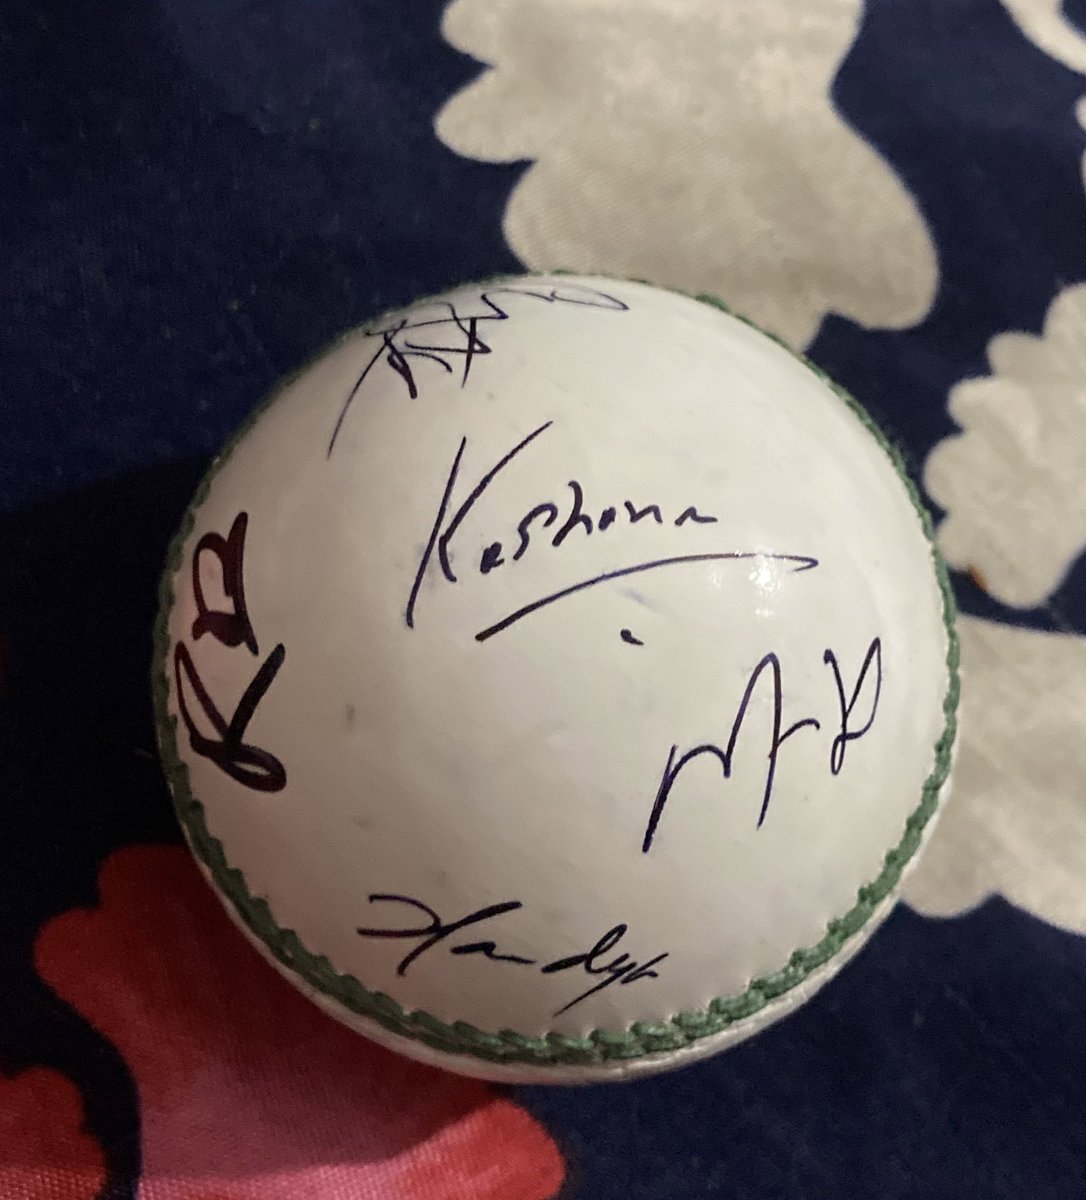 Thank u so much @LucknowIPL 
For a full squad autographed bowl rare one best treasure ❤️
@klrahul @QuinnyDeKock69 @krunalpandya24 @JasonHolder @Avesh_6